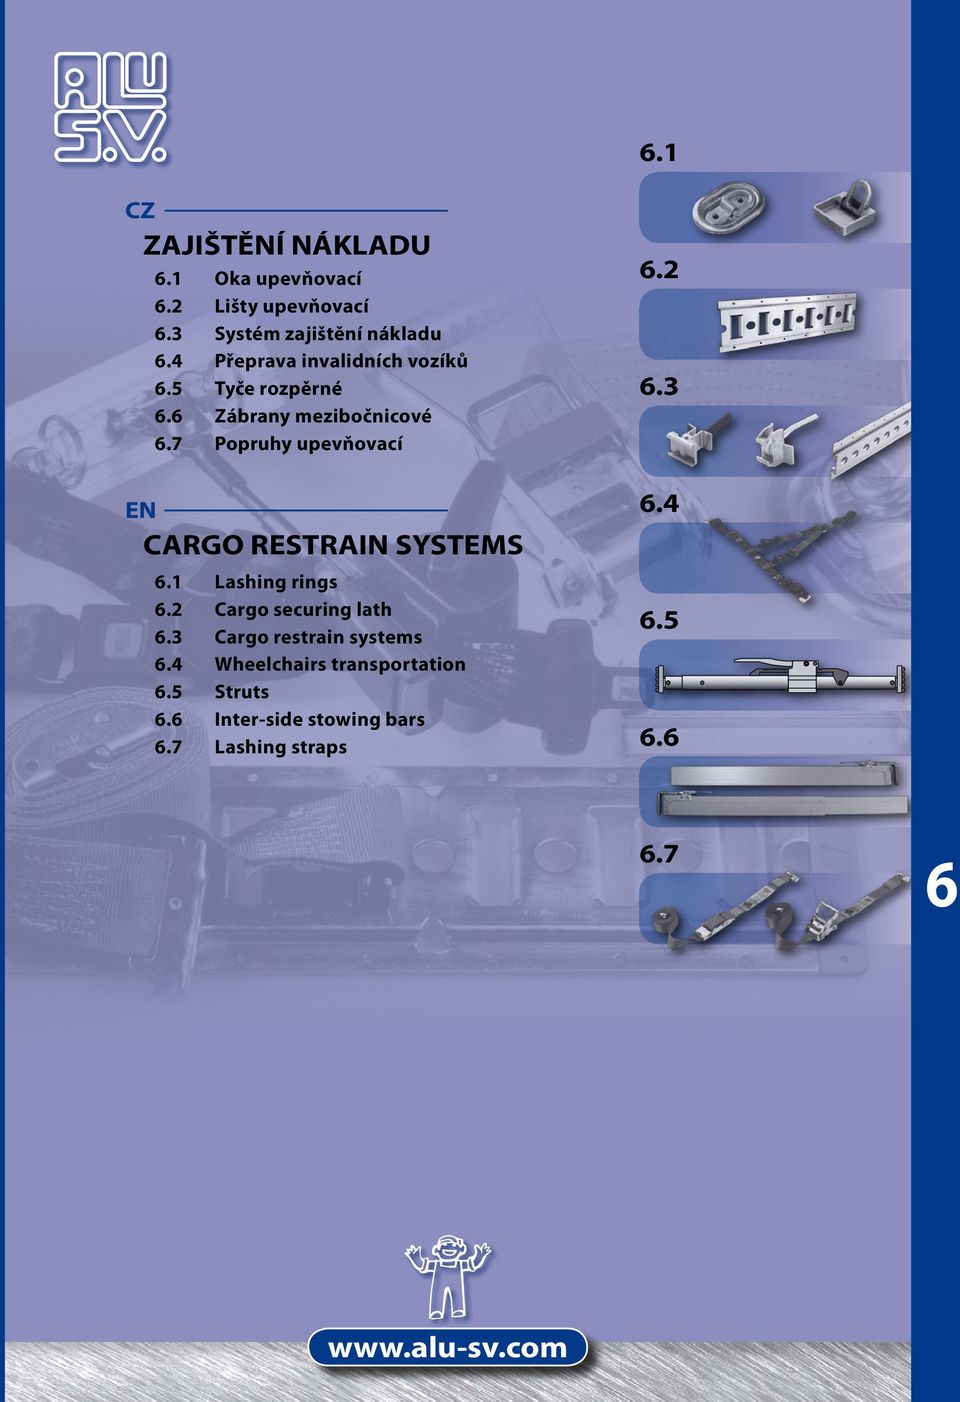 7 Popruhy upevňovací EN 6.1 ashing rings 6.2 Cargo securing lath 6.3 Cargo restrain systems 6.